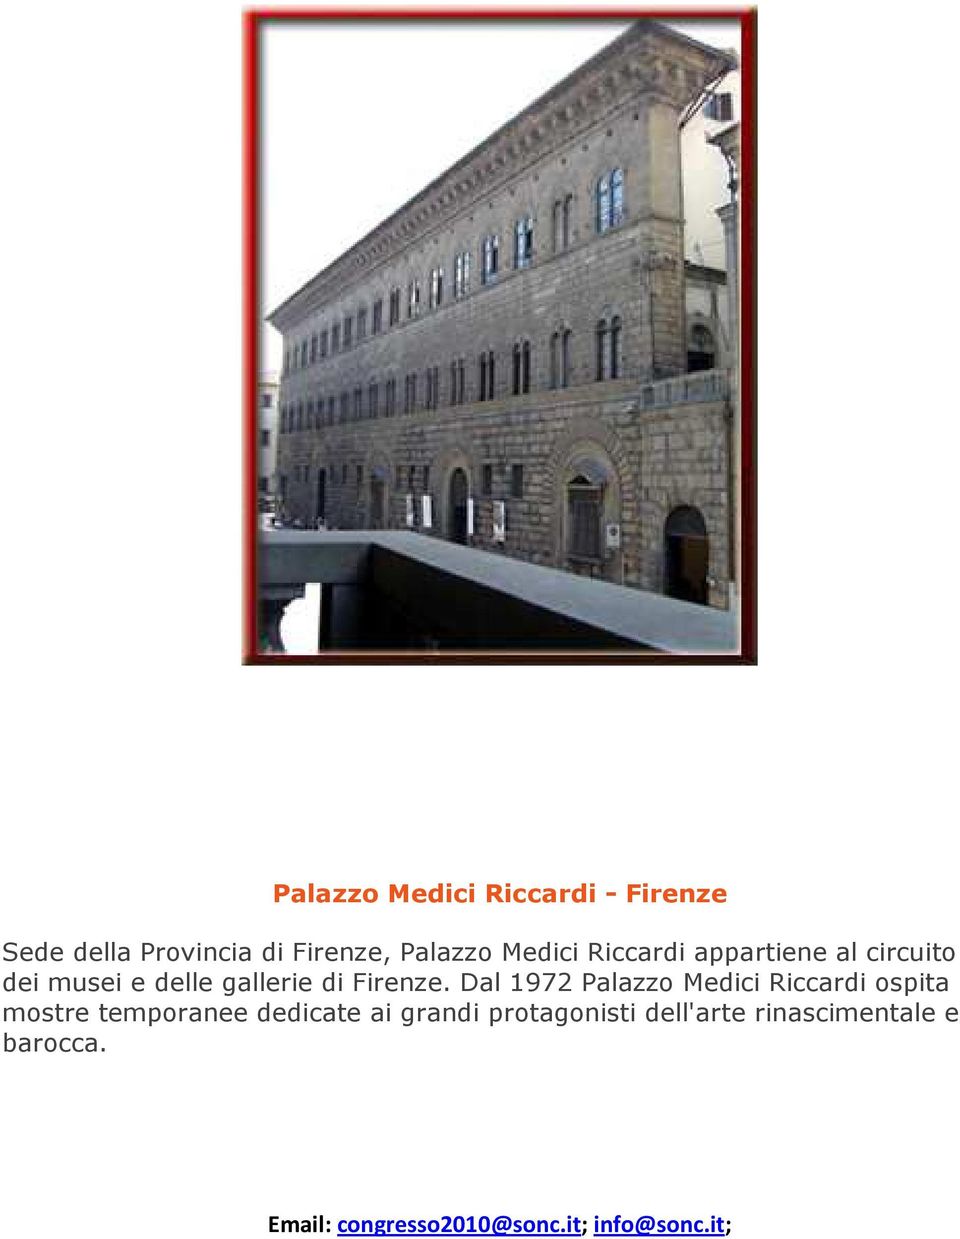 Dal 1972 Palazzo Medici Riccardi ospita mostre temporanee dedicate ai grandi